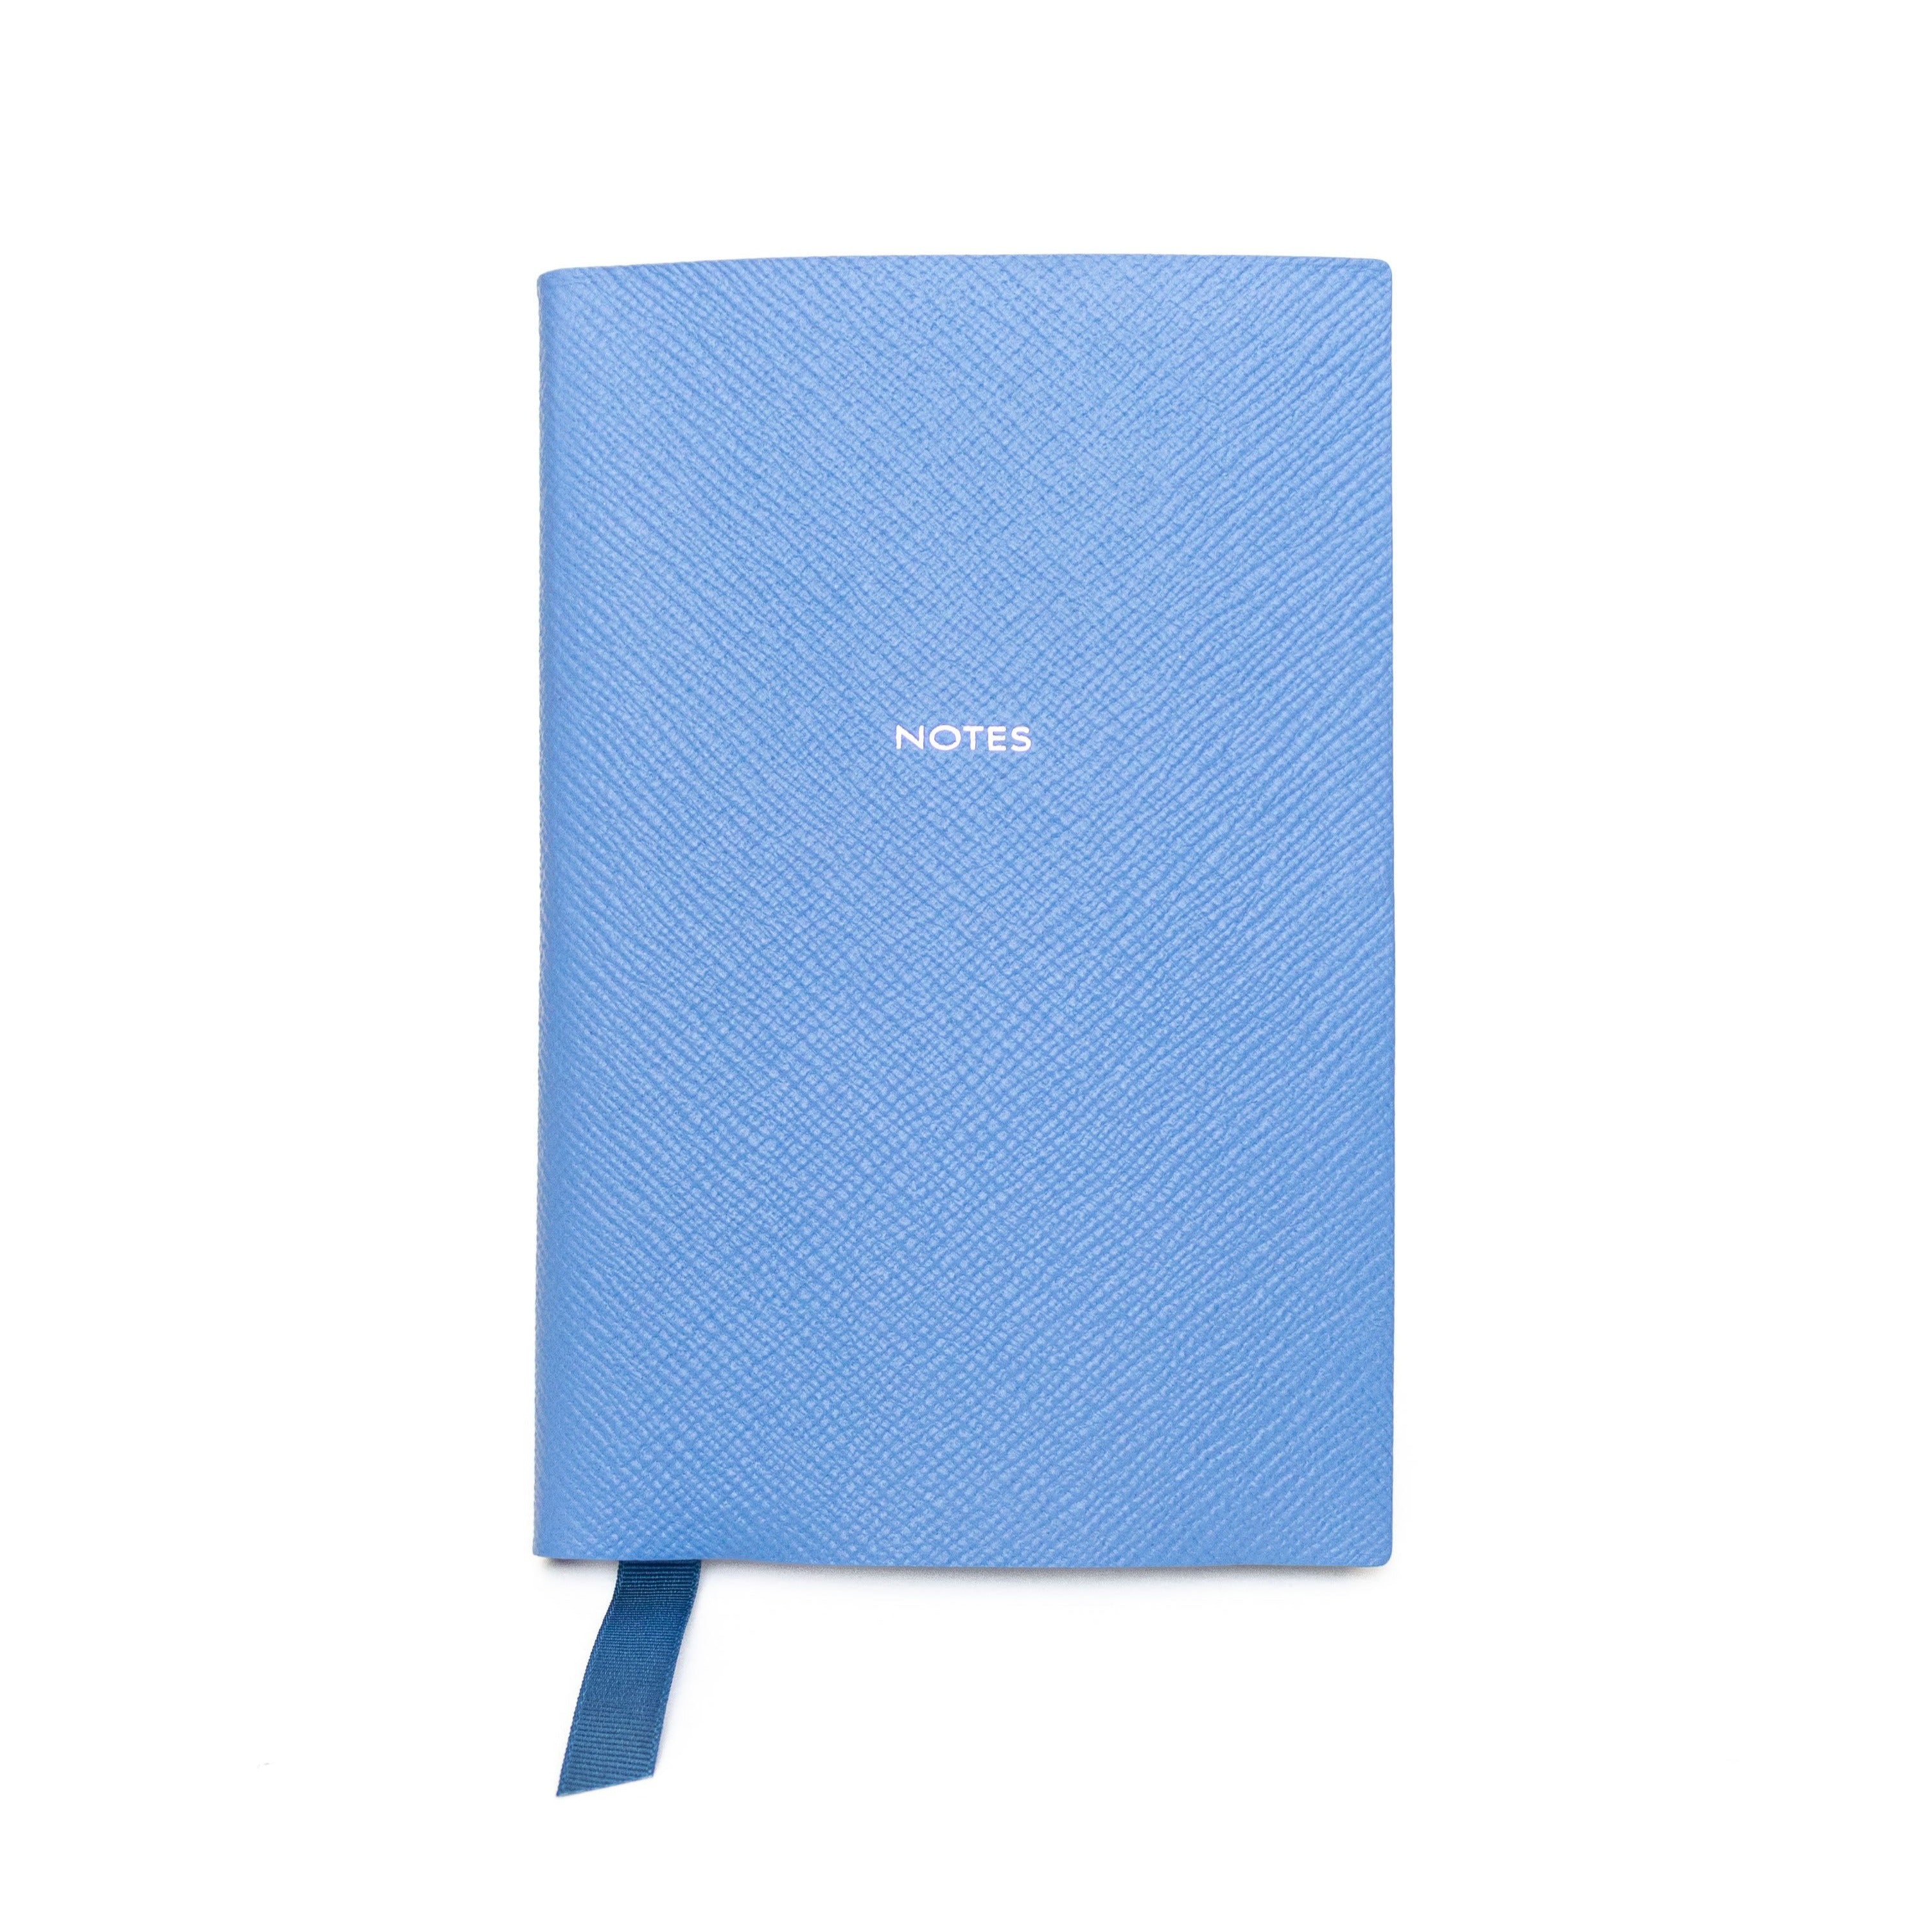 Smythson Chelsea Notebook Notes Blue